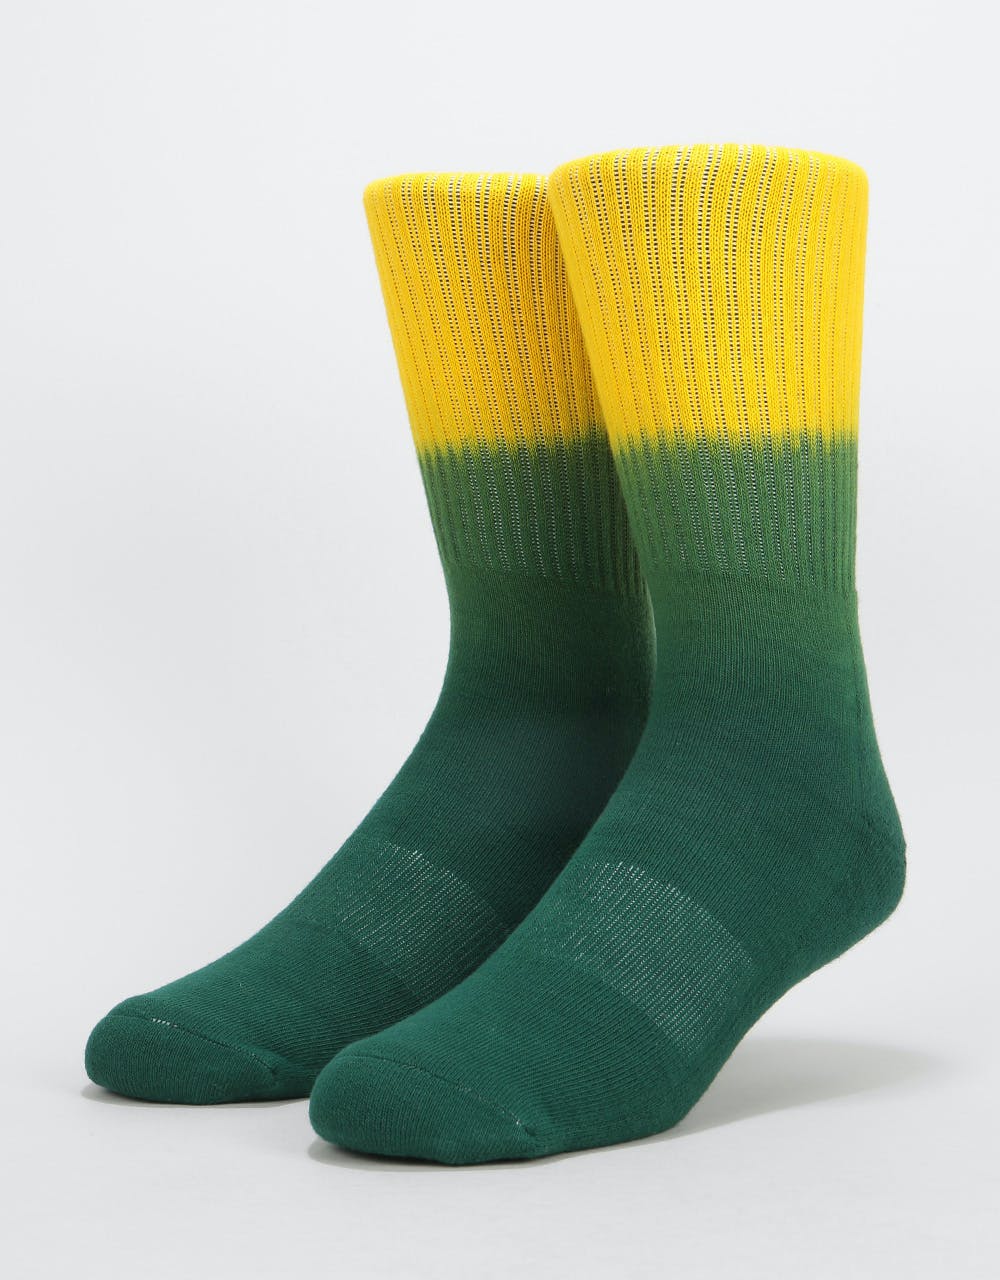 Route One Tie Dye Crew Socks - Yellow/Green